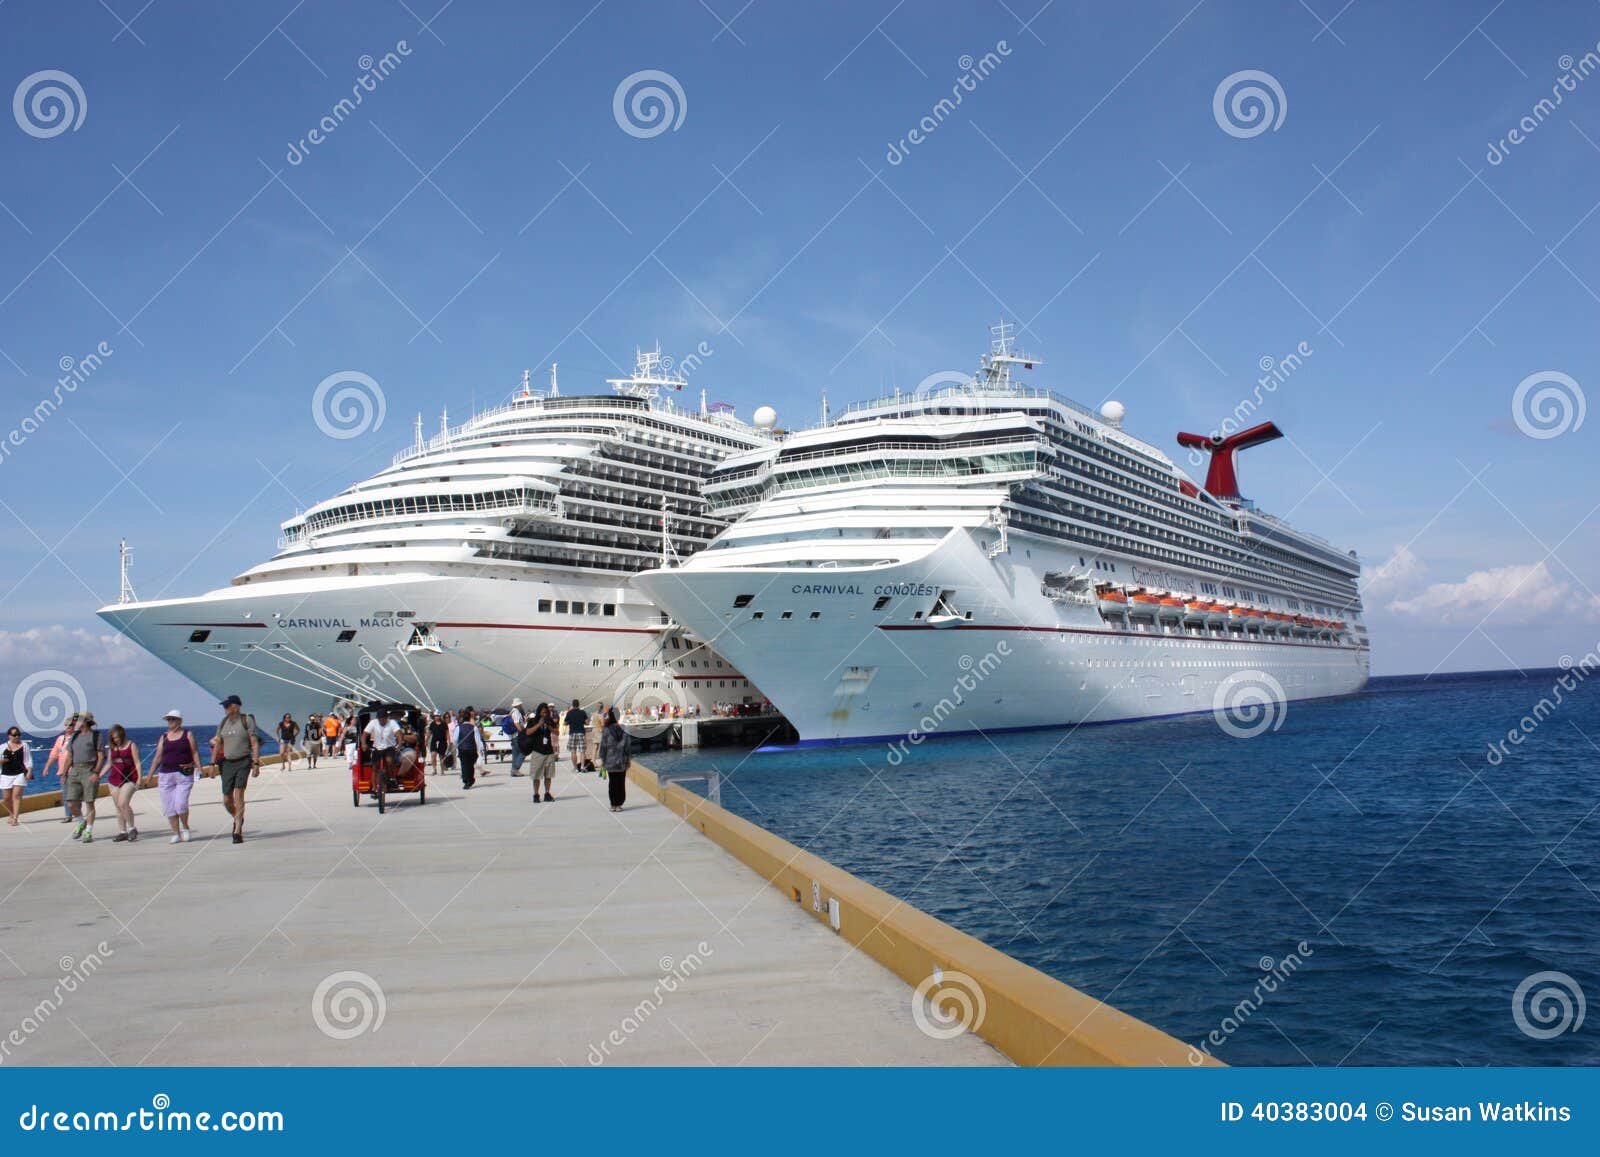 carnival cruise line stockholder credit